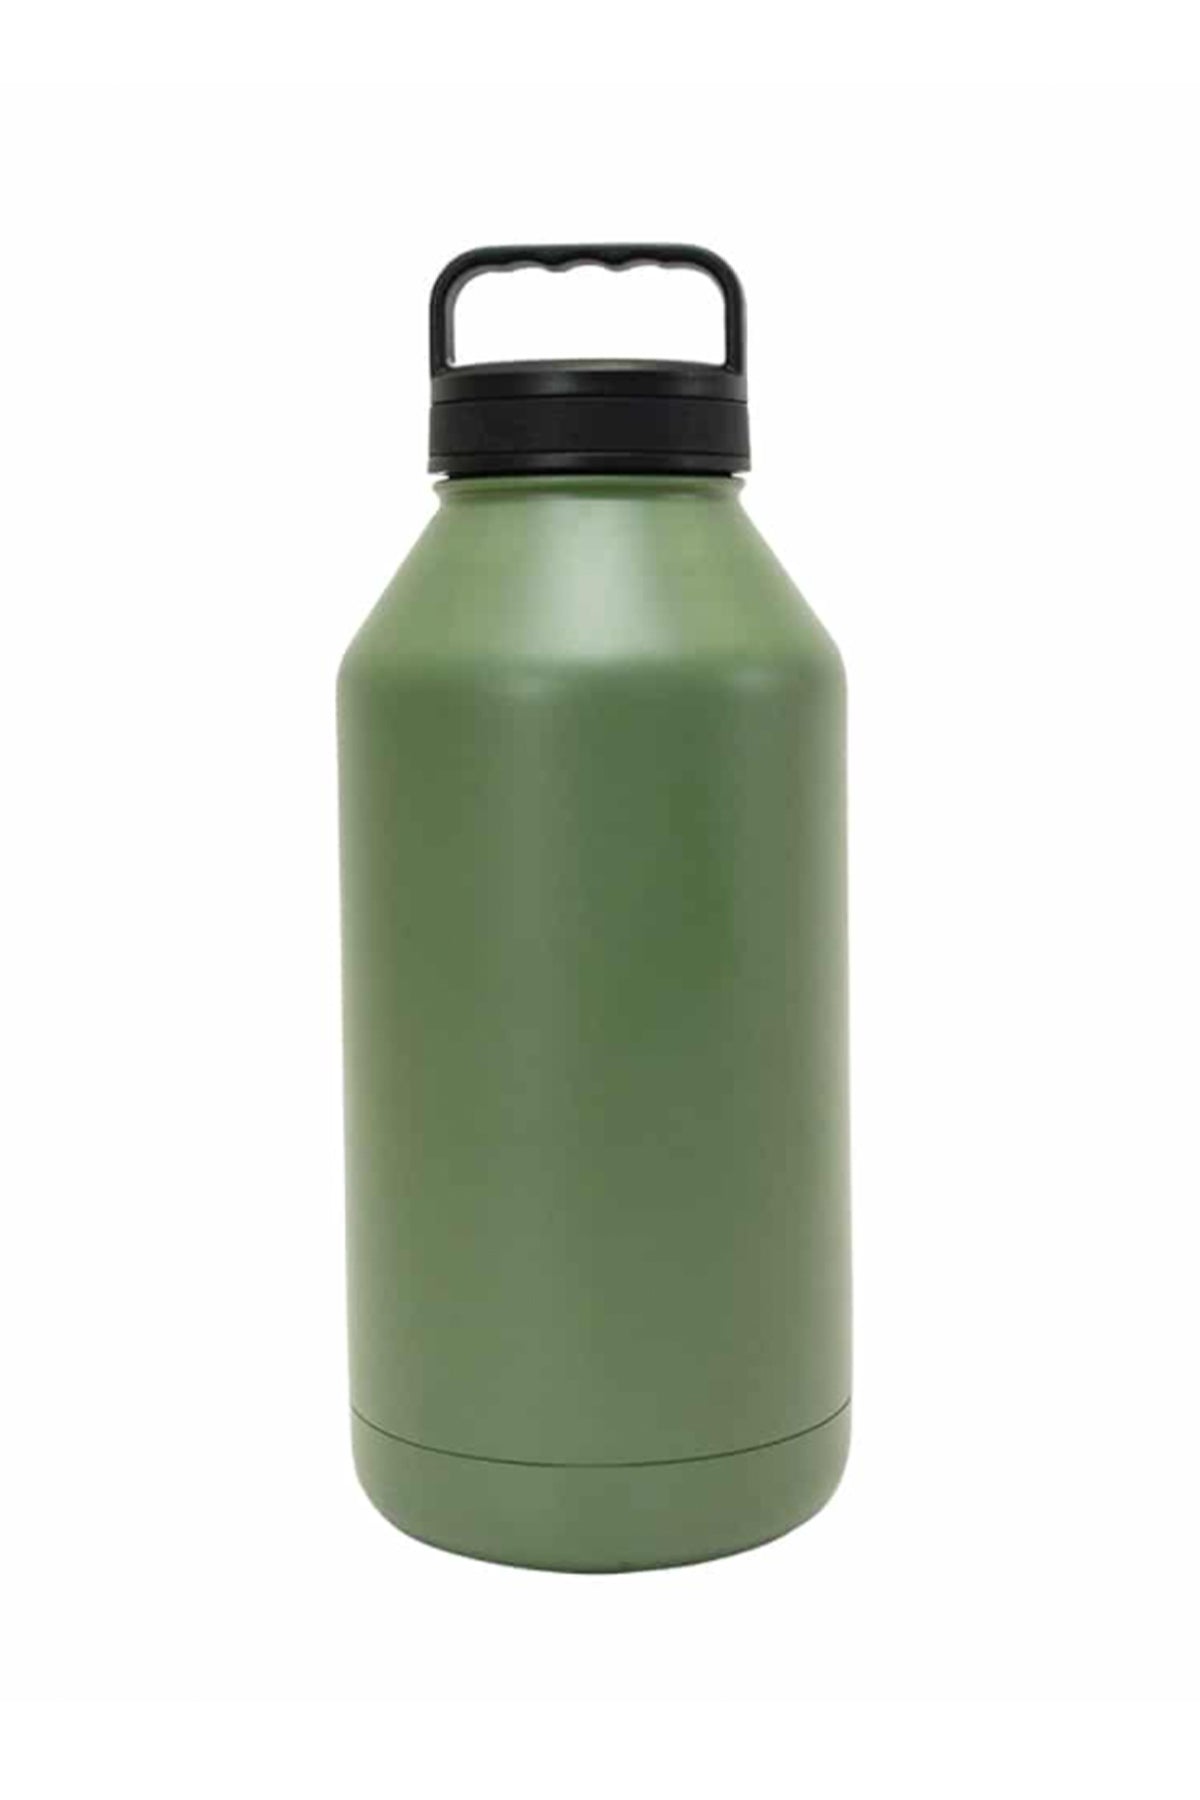 Watermate Stainless Big Bottle Khaki 1.9L